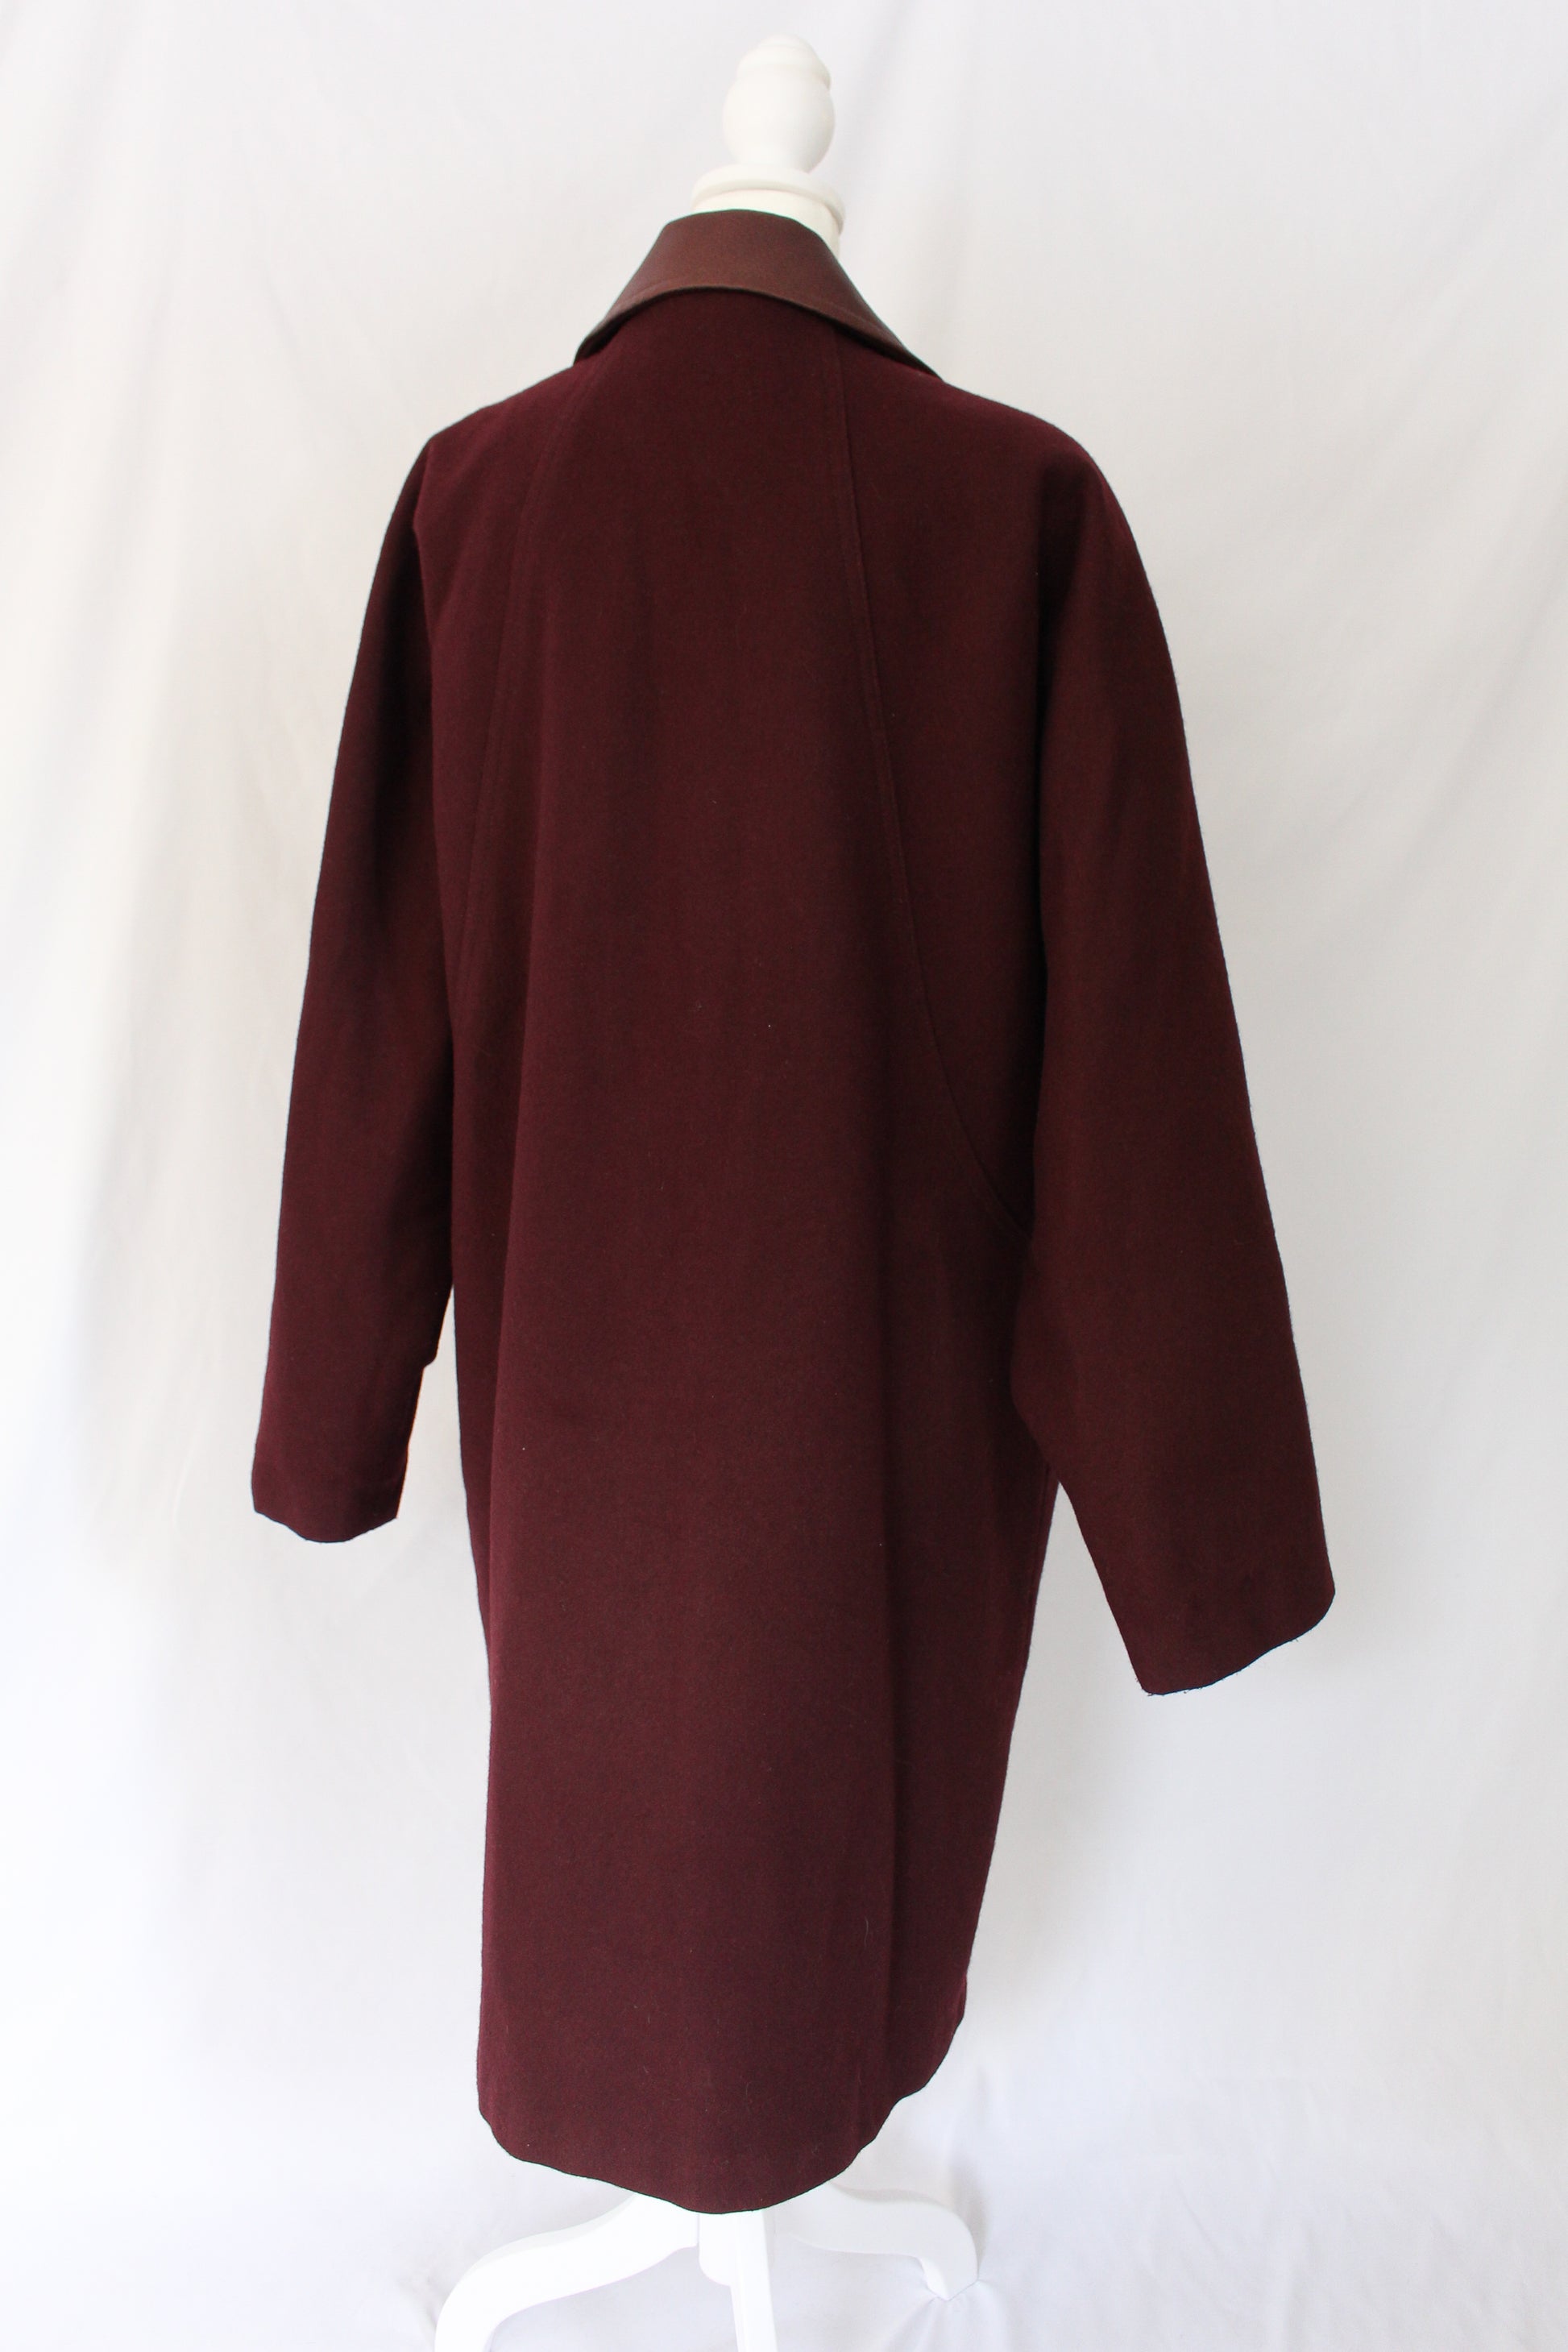 burgundy wool coat secondhand